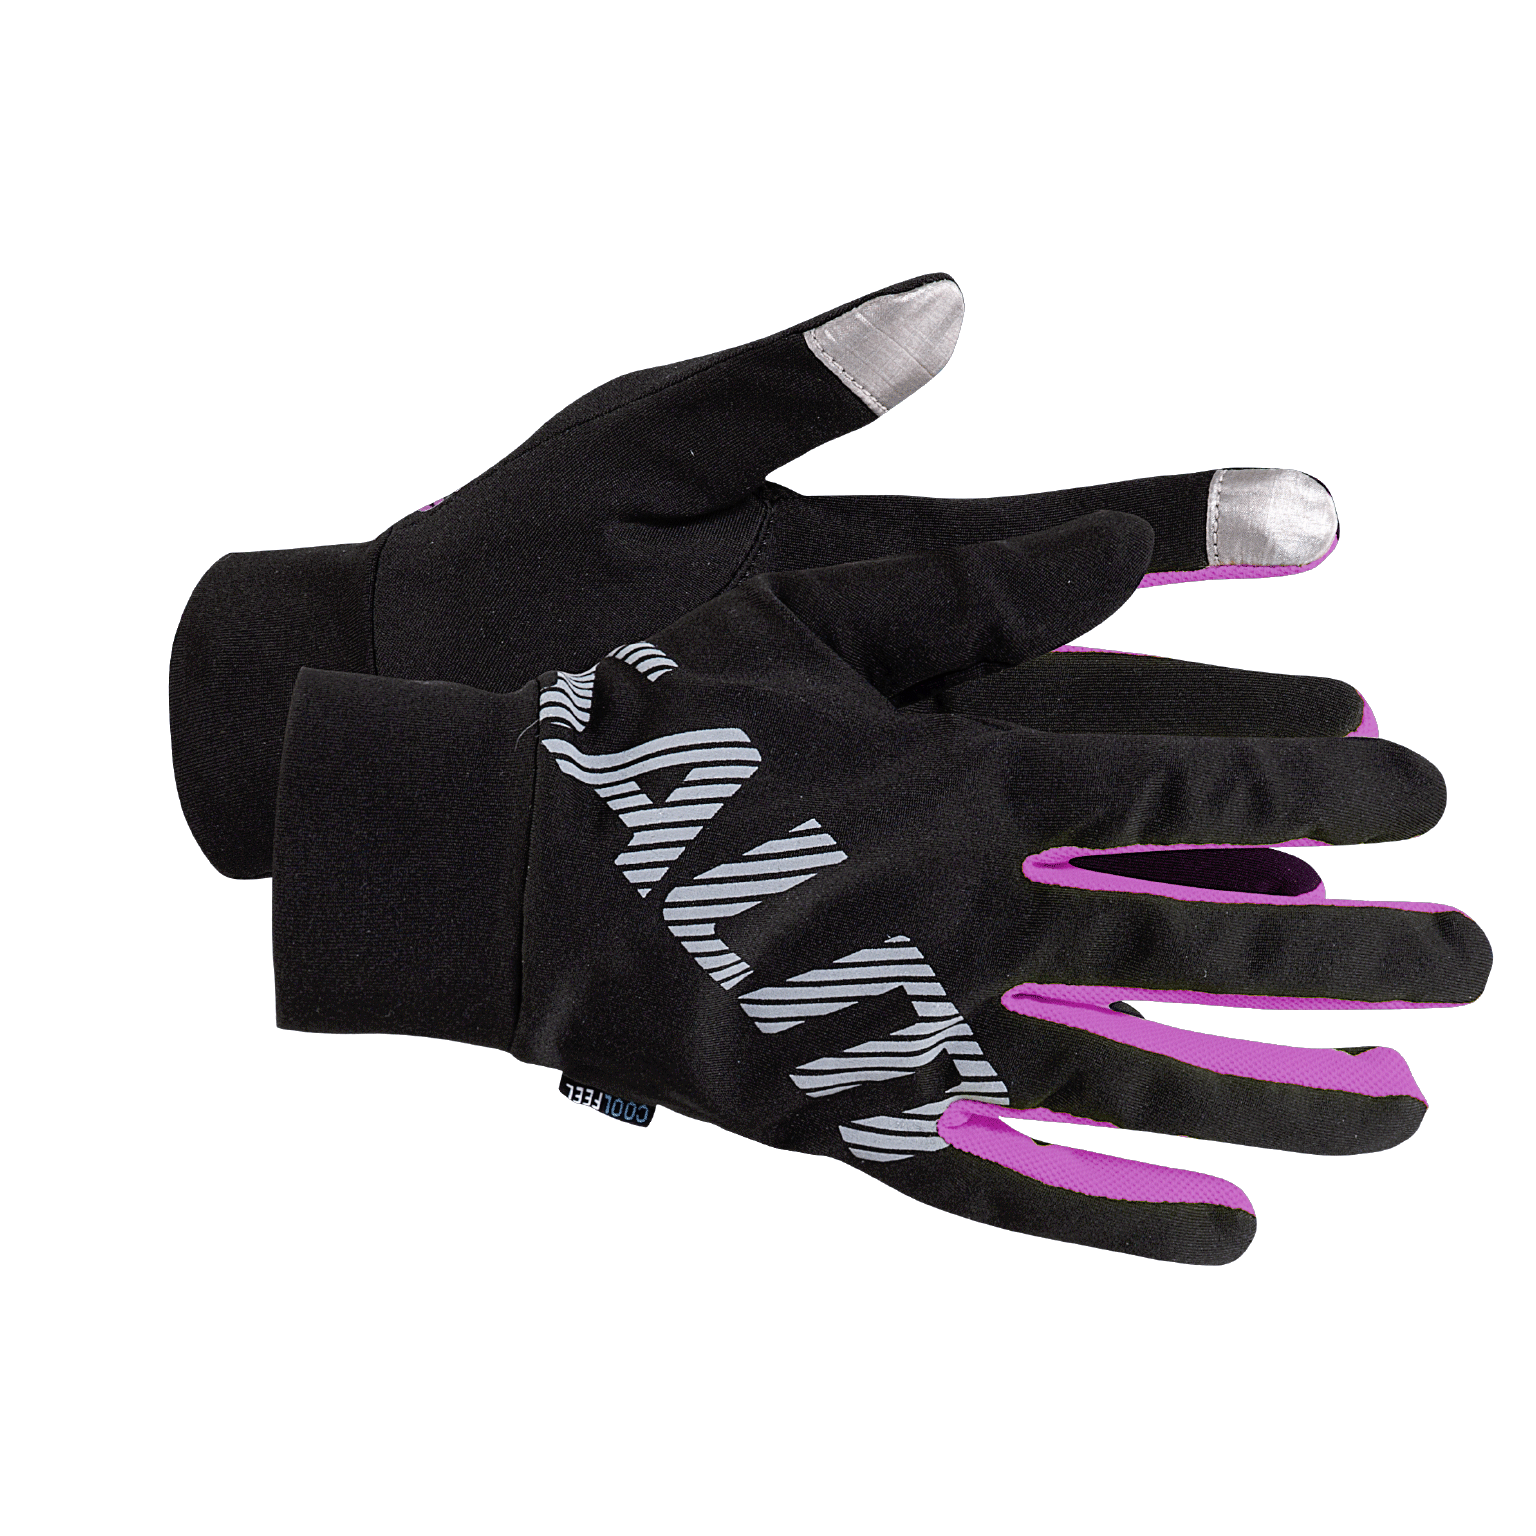 SALMING Running Gloves Black/Pink Glo